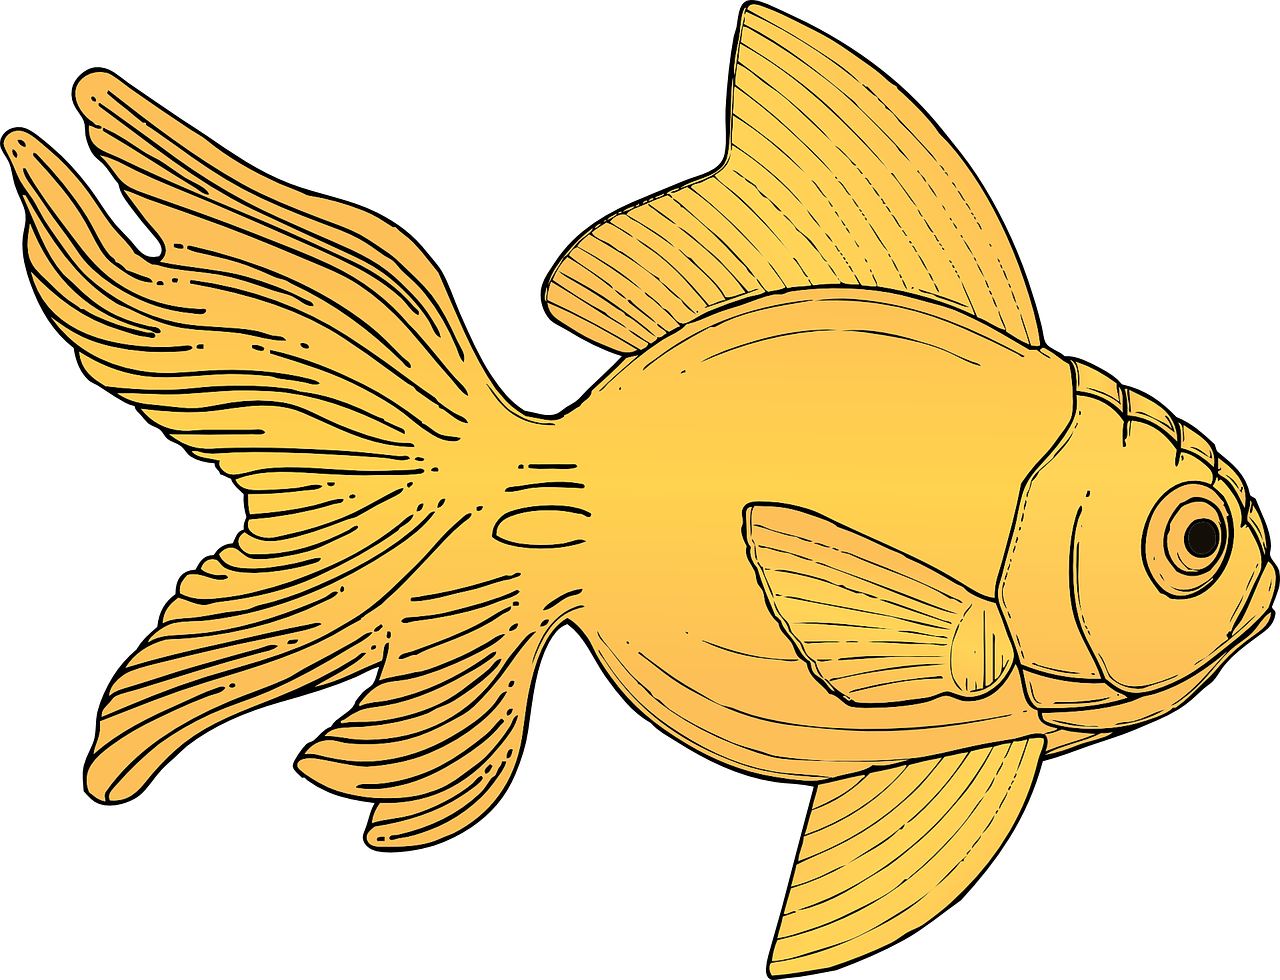 Gold, Fish, Aquarium, Goldfish, Fins, Swimming, Fresh - Gold Fish Clip Art, Hd Png Download